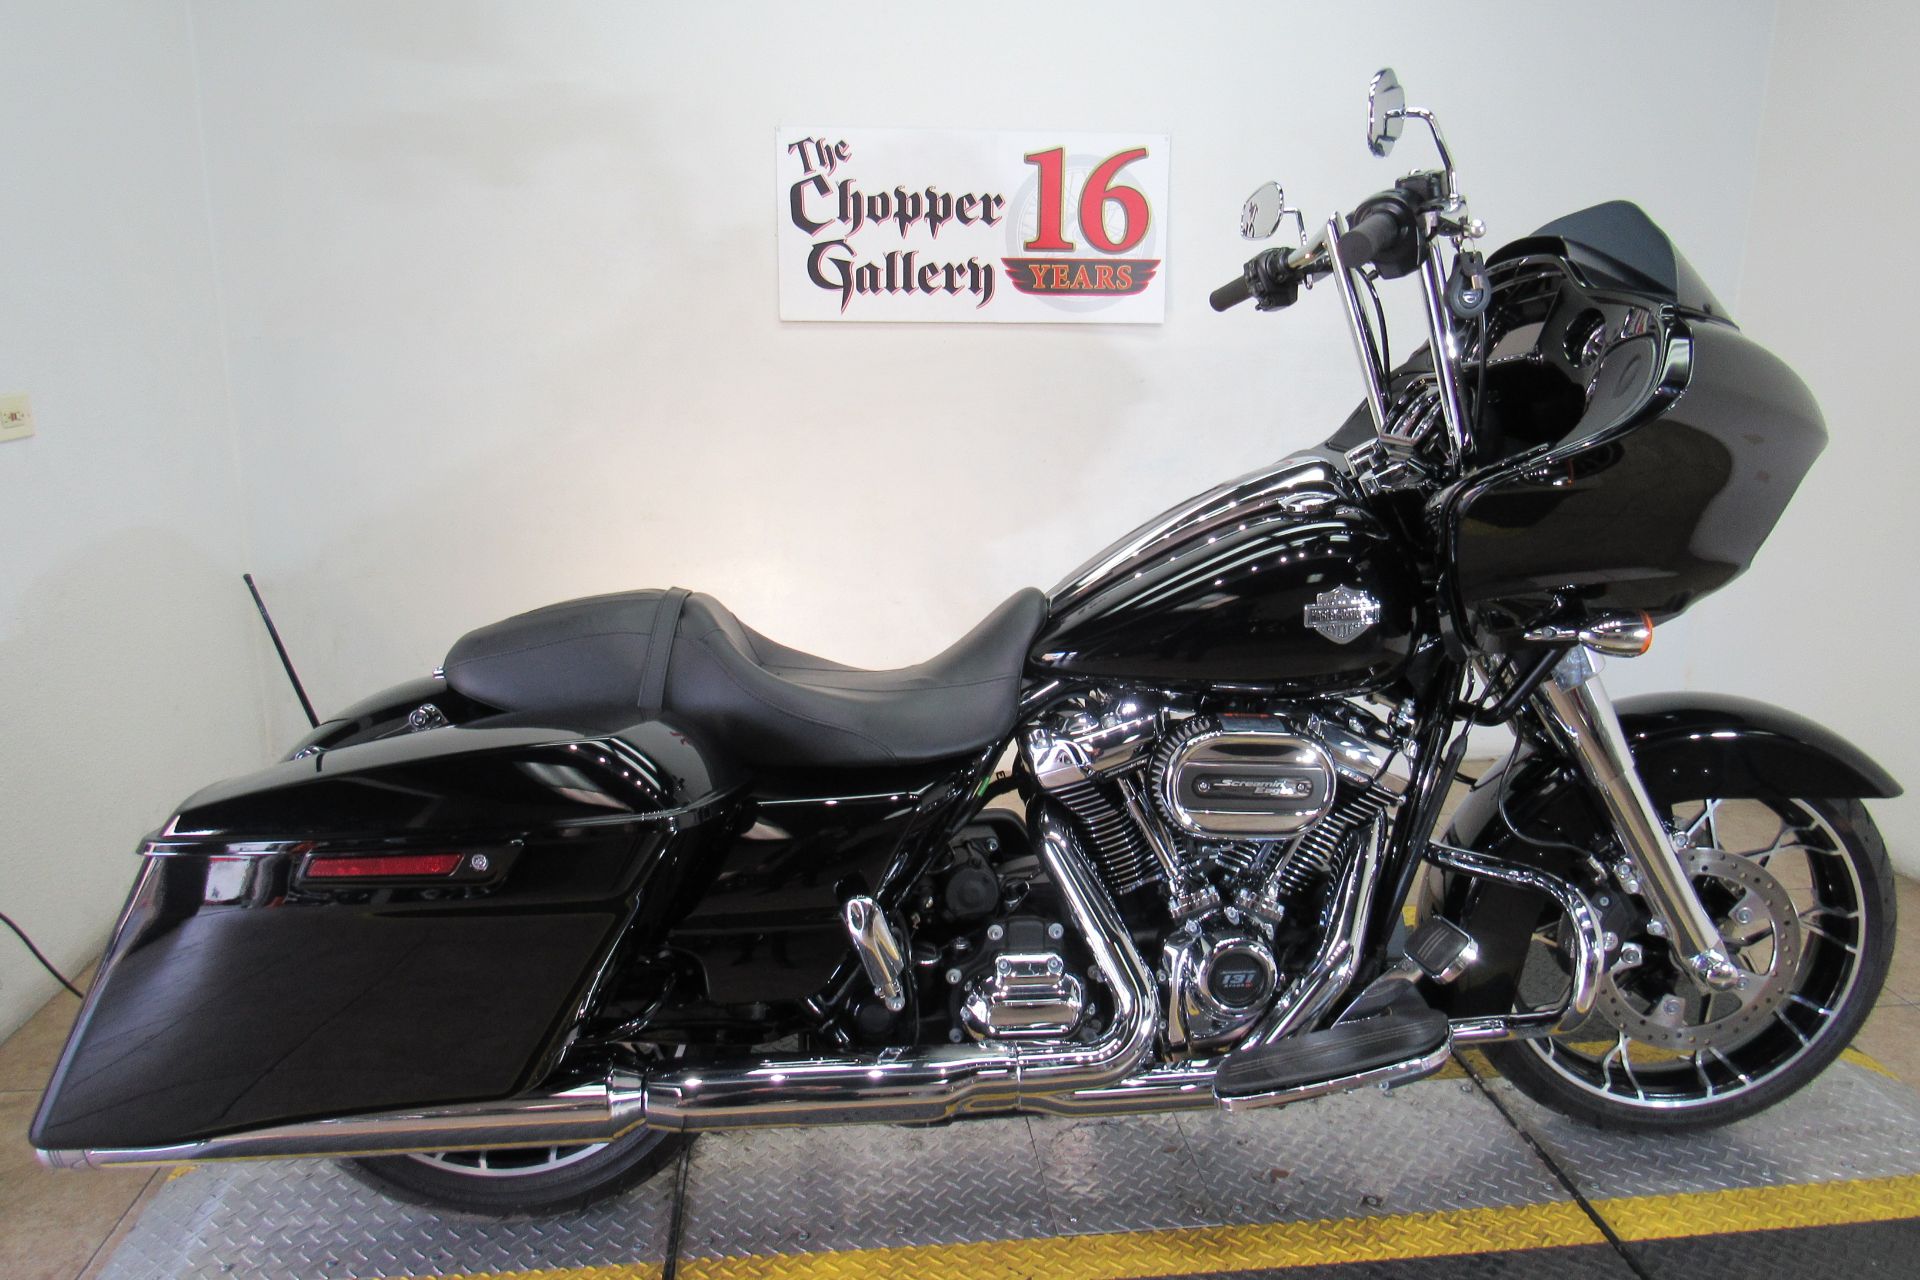 2021 Harley-Davidson Road Glide® Special in Temecula, California - Photo 11